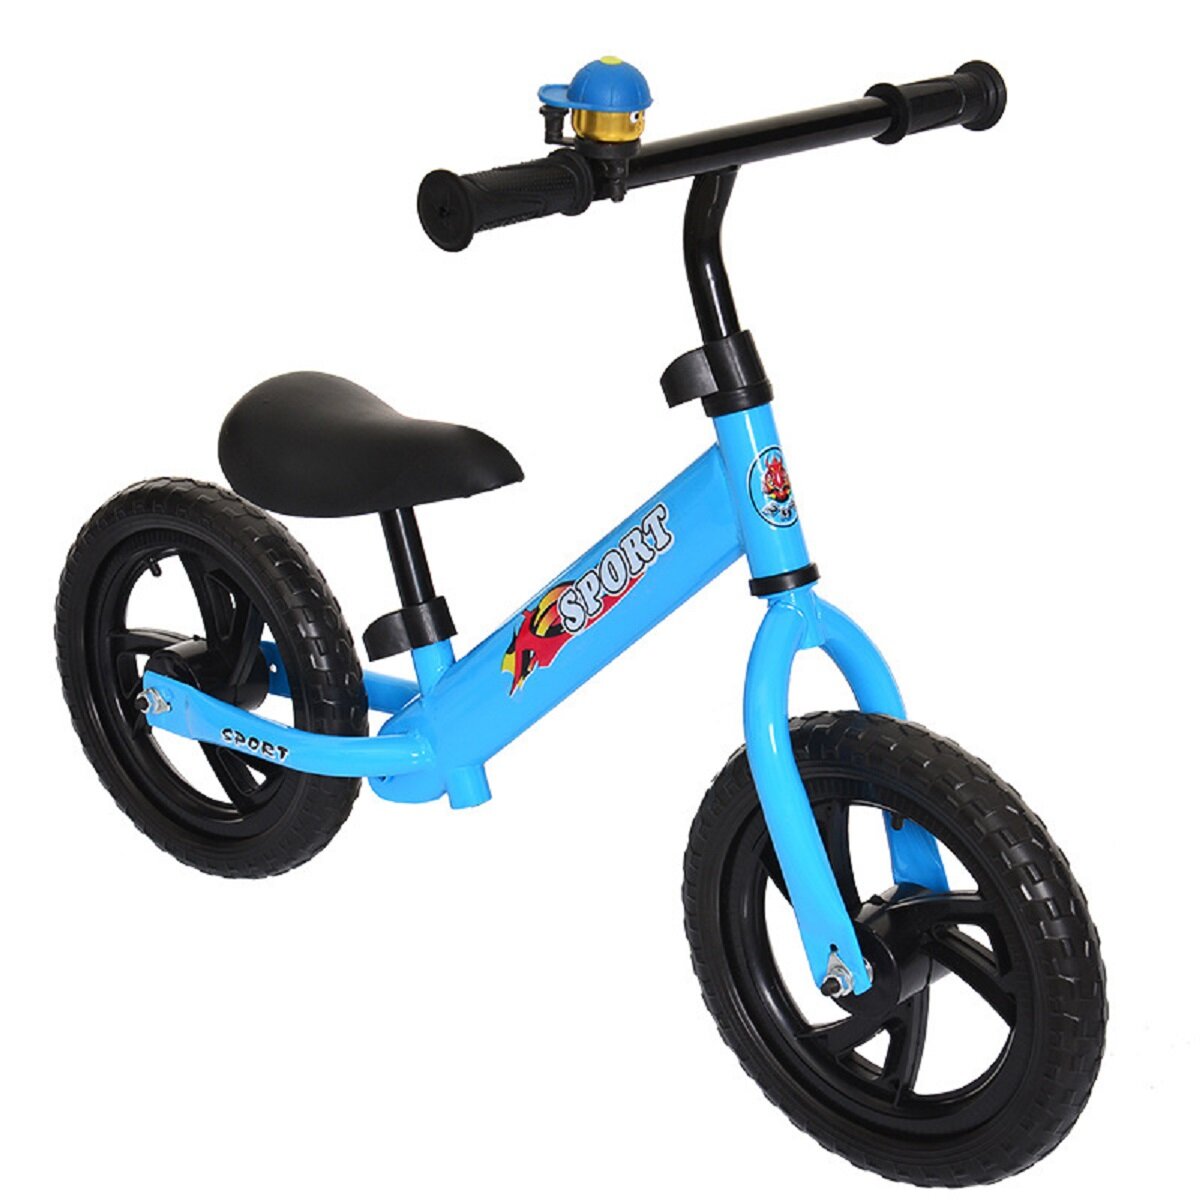 2 Wheels No Pedal Toddler Balance Bike Kids Training Walker bmx Bike Adjustable Height 89-129cm for 2-6 Years Old Boys&G